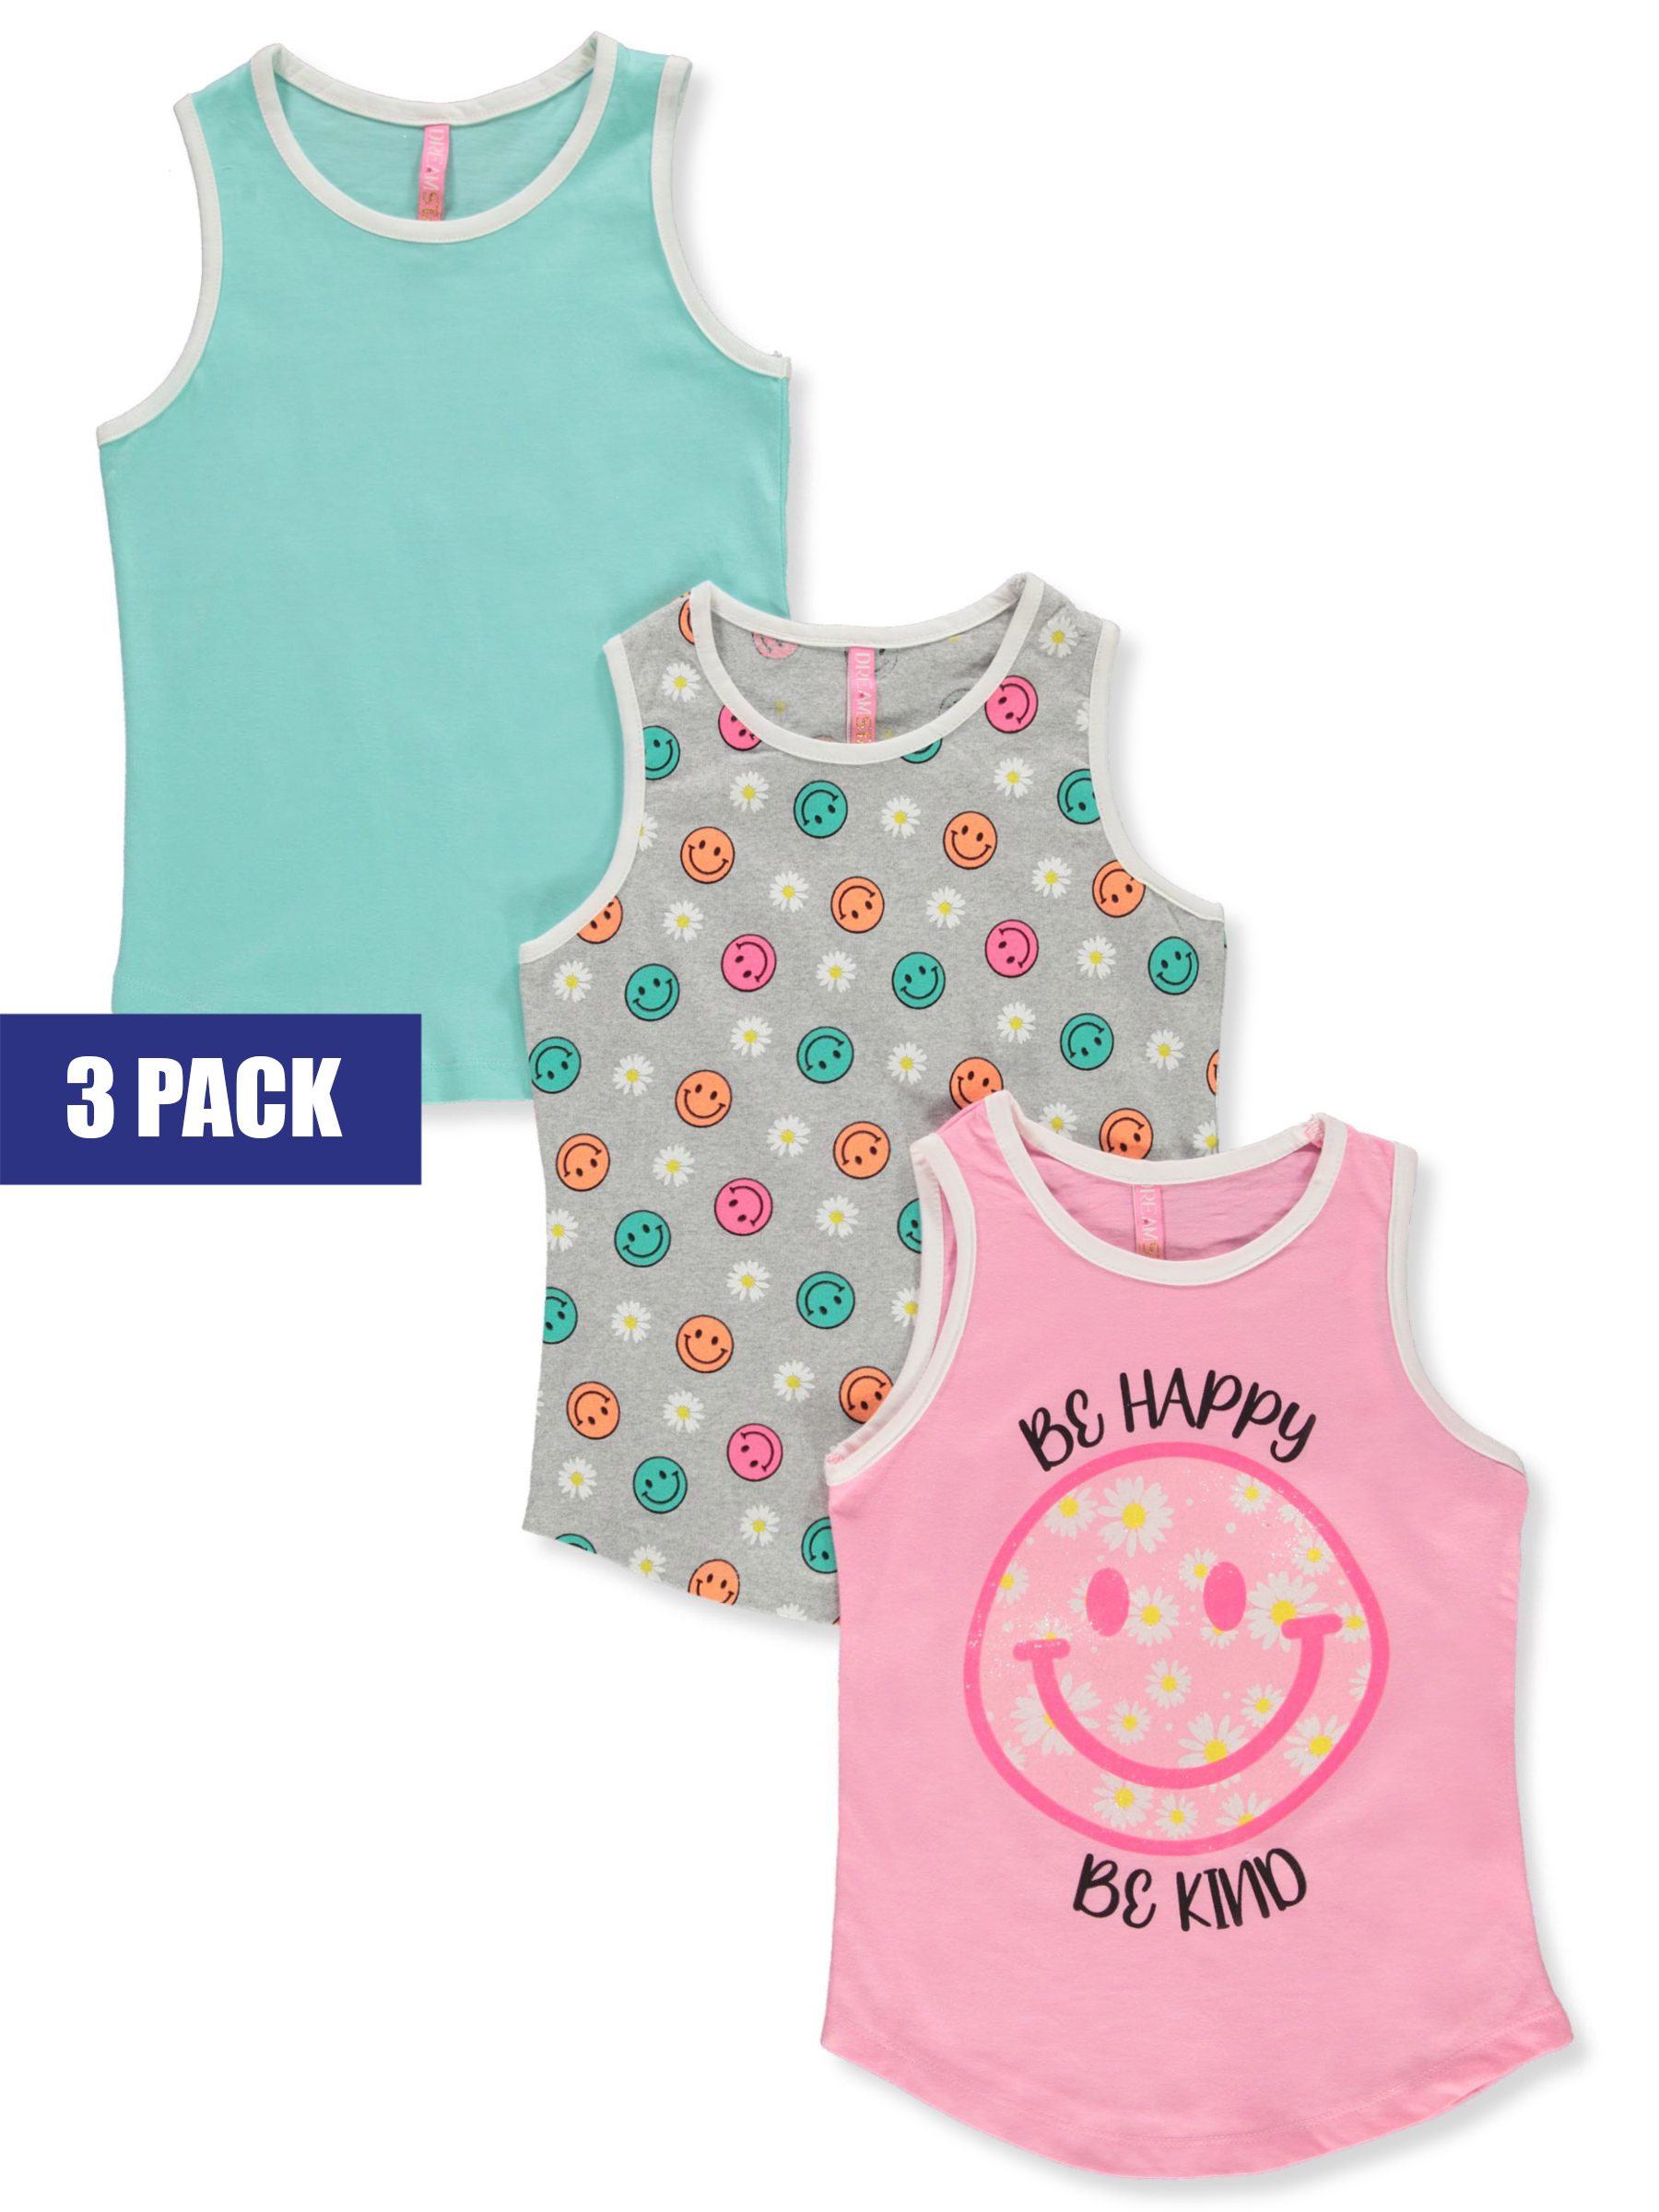 Dreamstar Girls' 3-Pack Smile Tank Tops - pink/multi, 14 (Big Girls ...